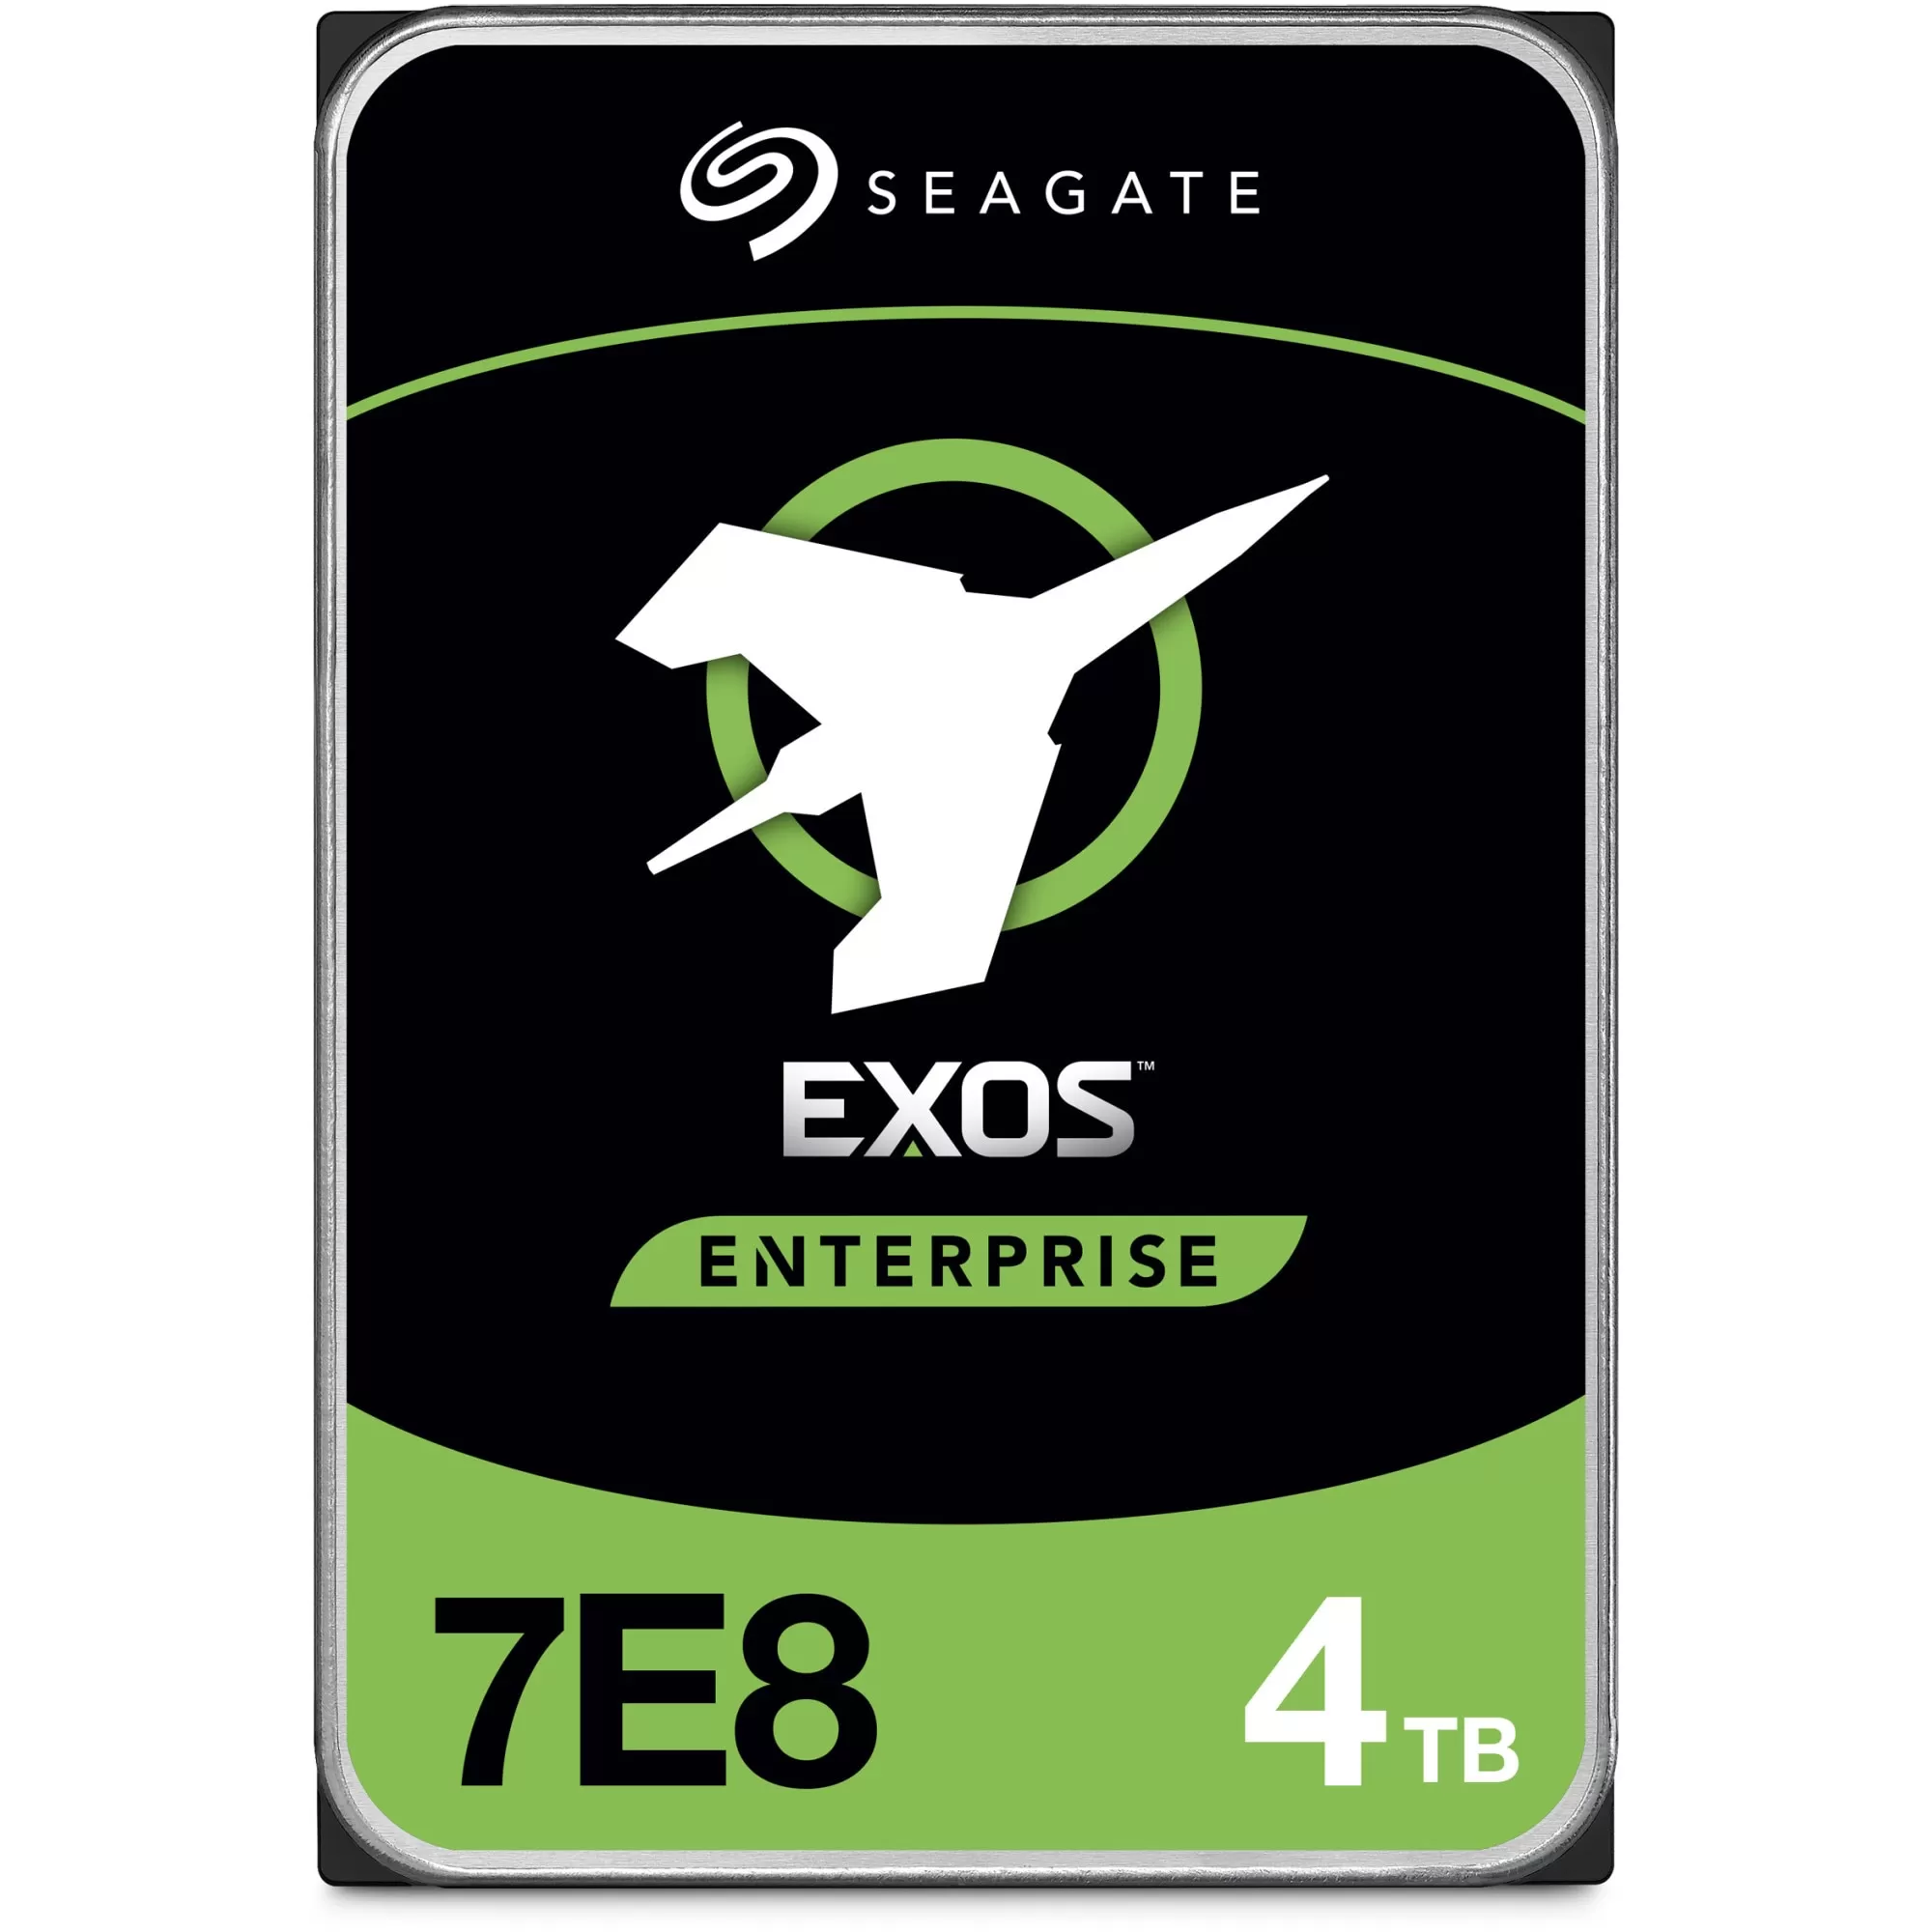 Hard Disk Server Seagate Exos 7E8 512n 4TB 3.5